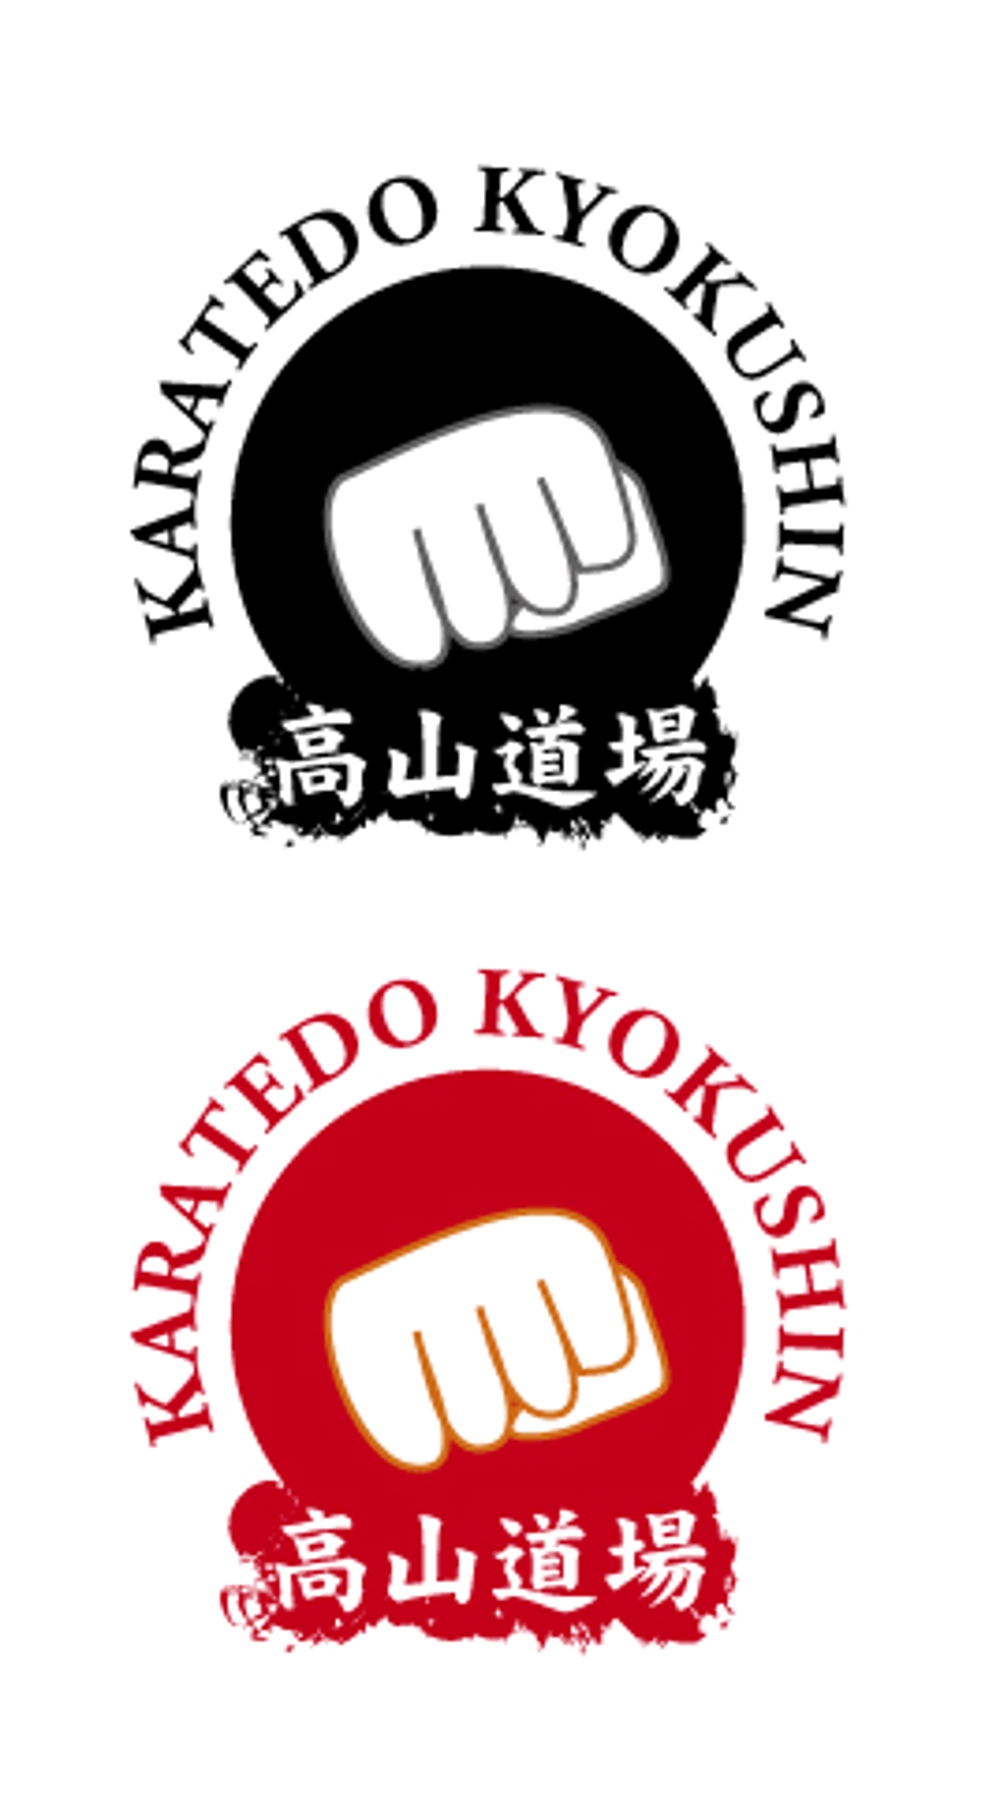 karatedotakayama.jpg